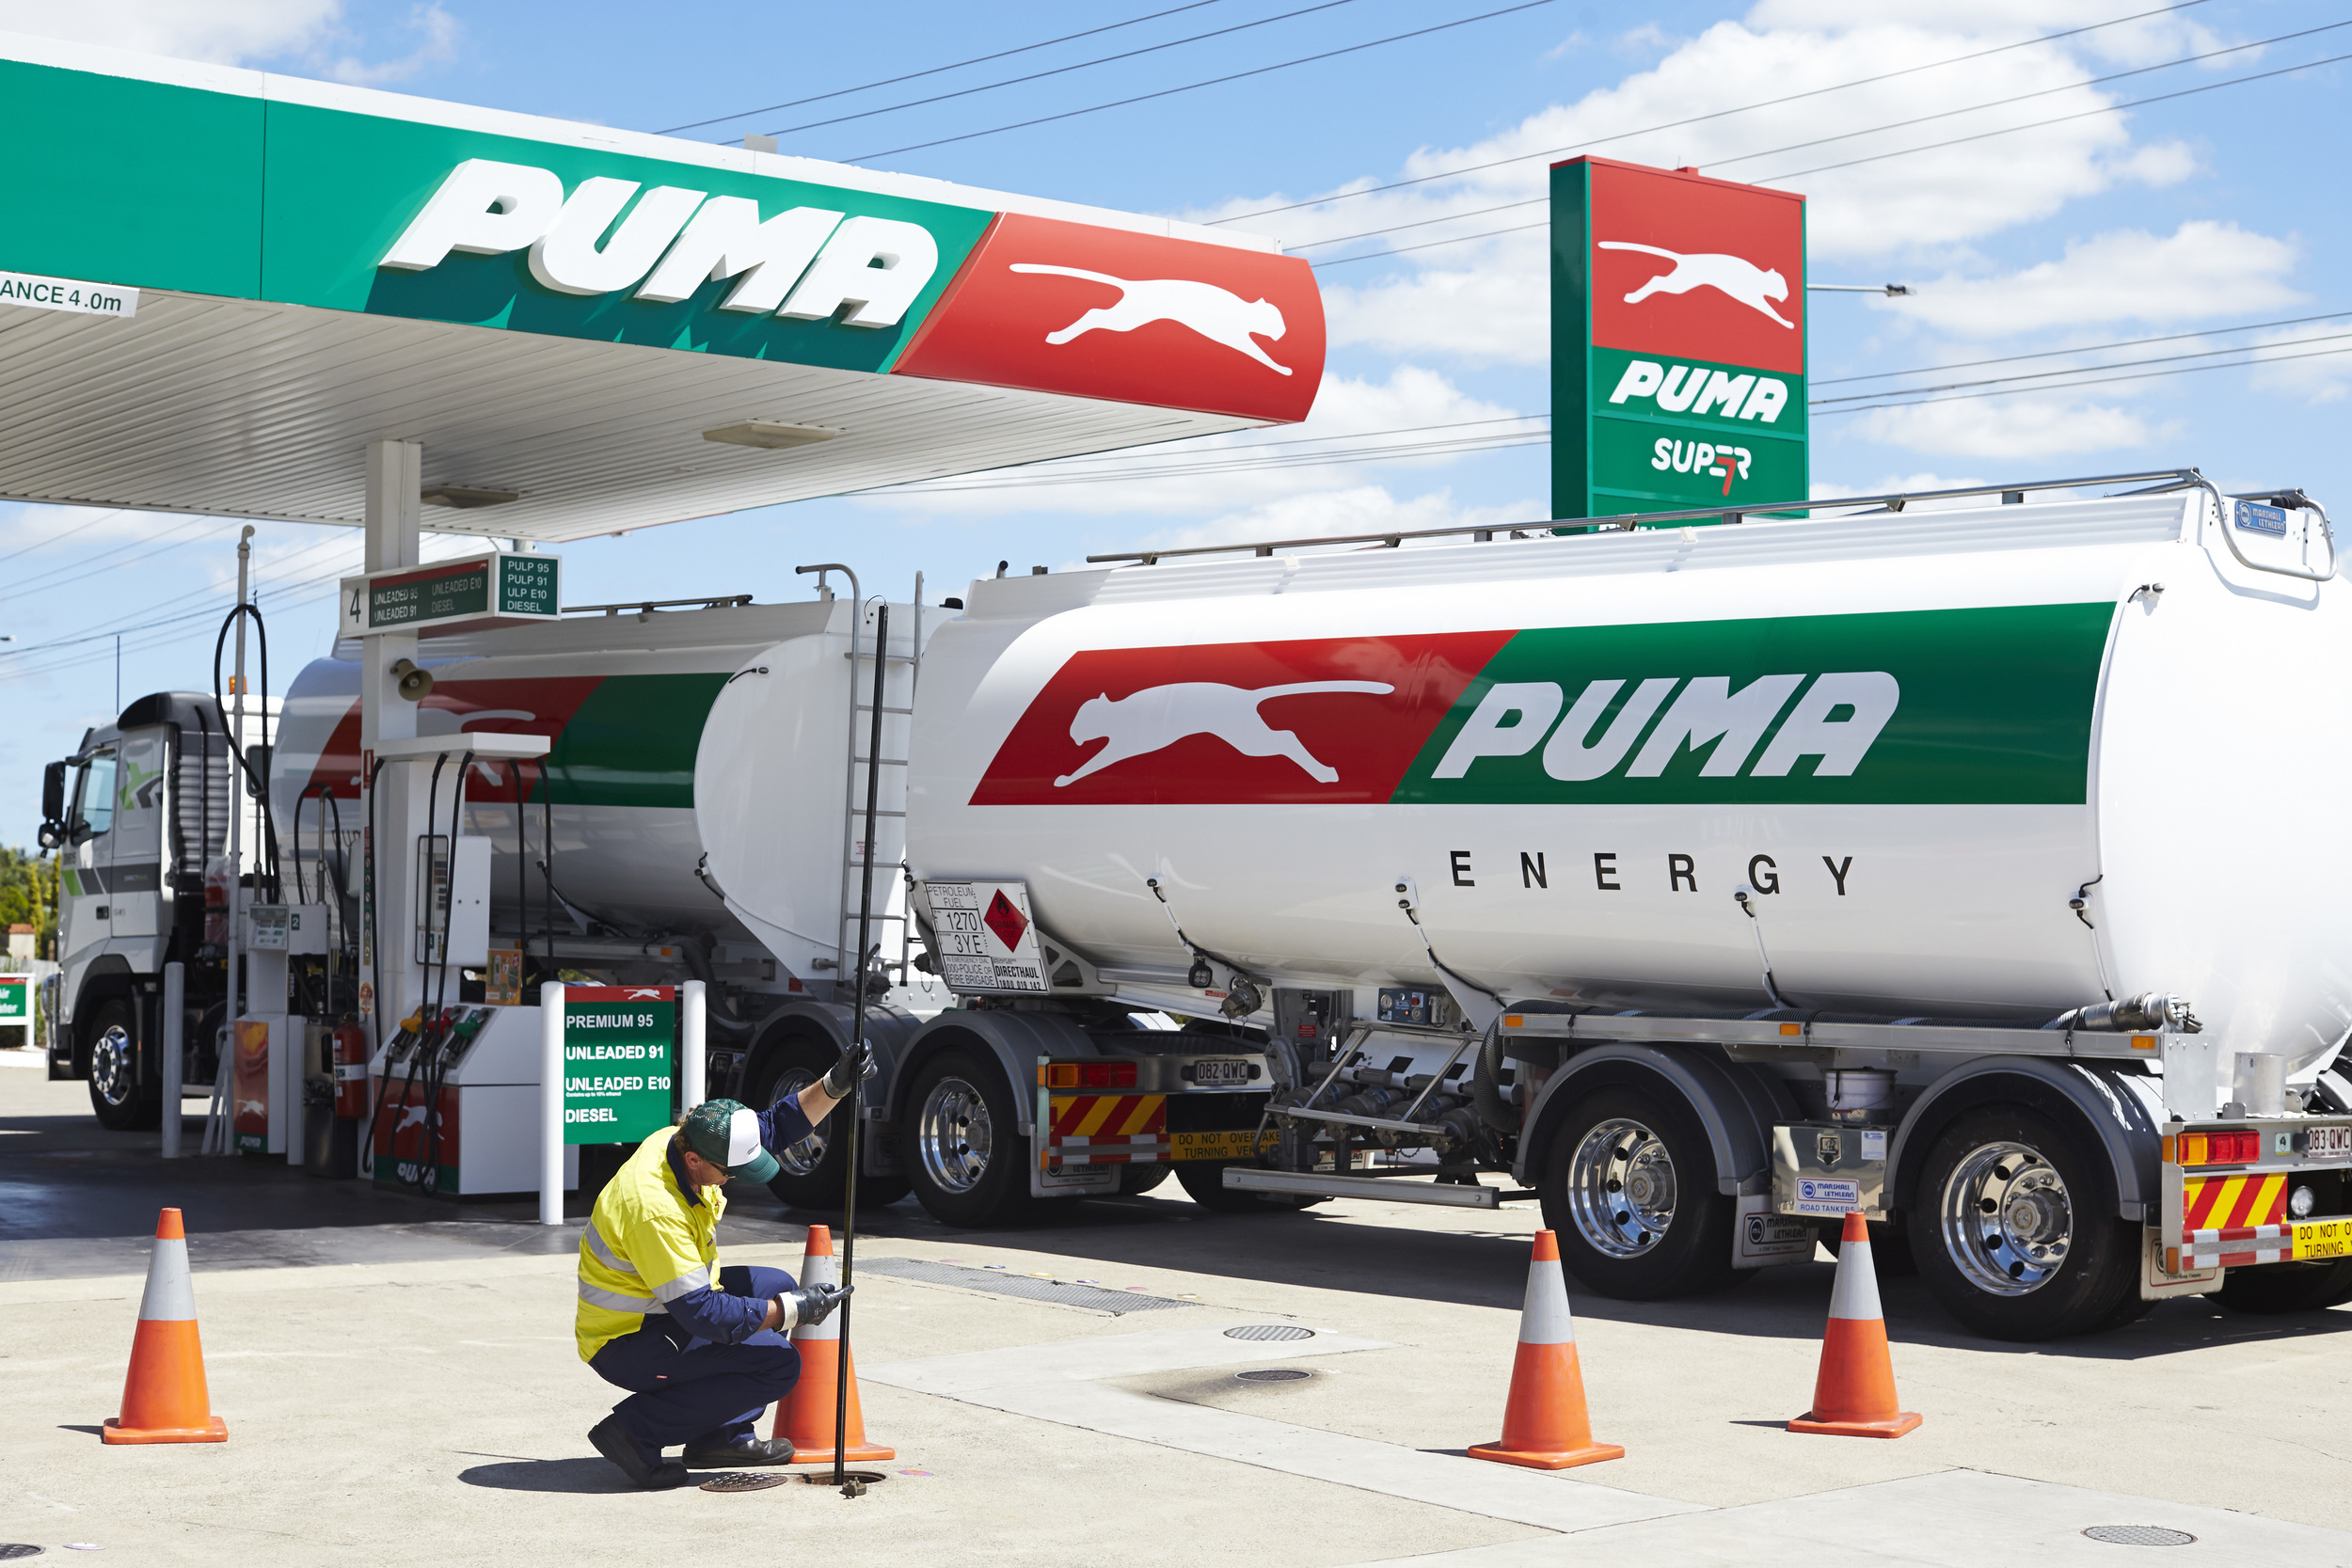 puma fuel station near me